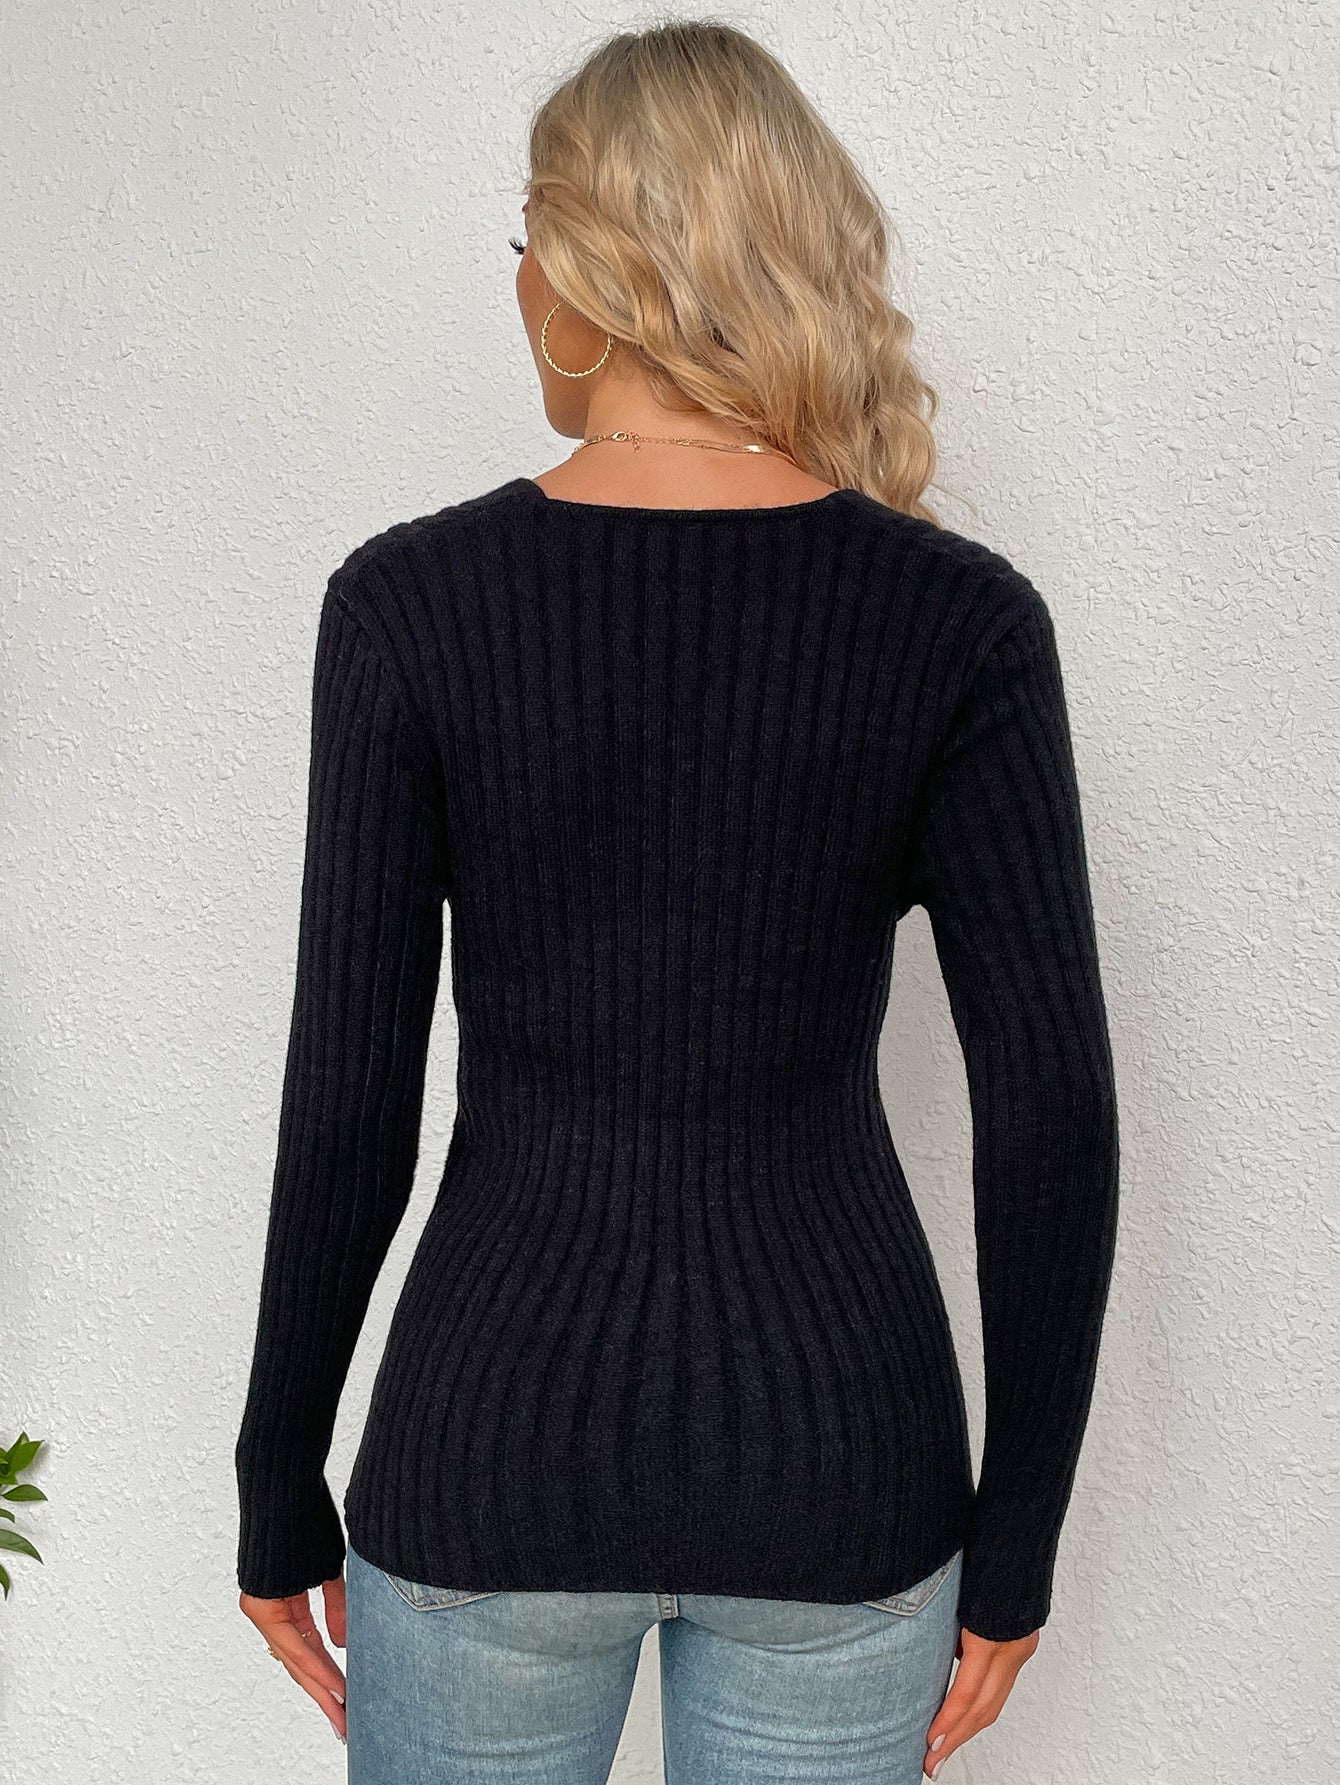 Women’s Crisscross Rib-Knit Sweater